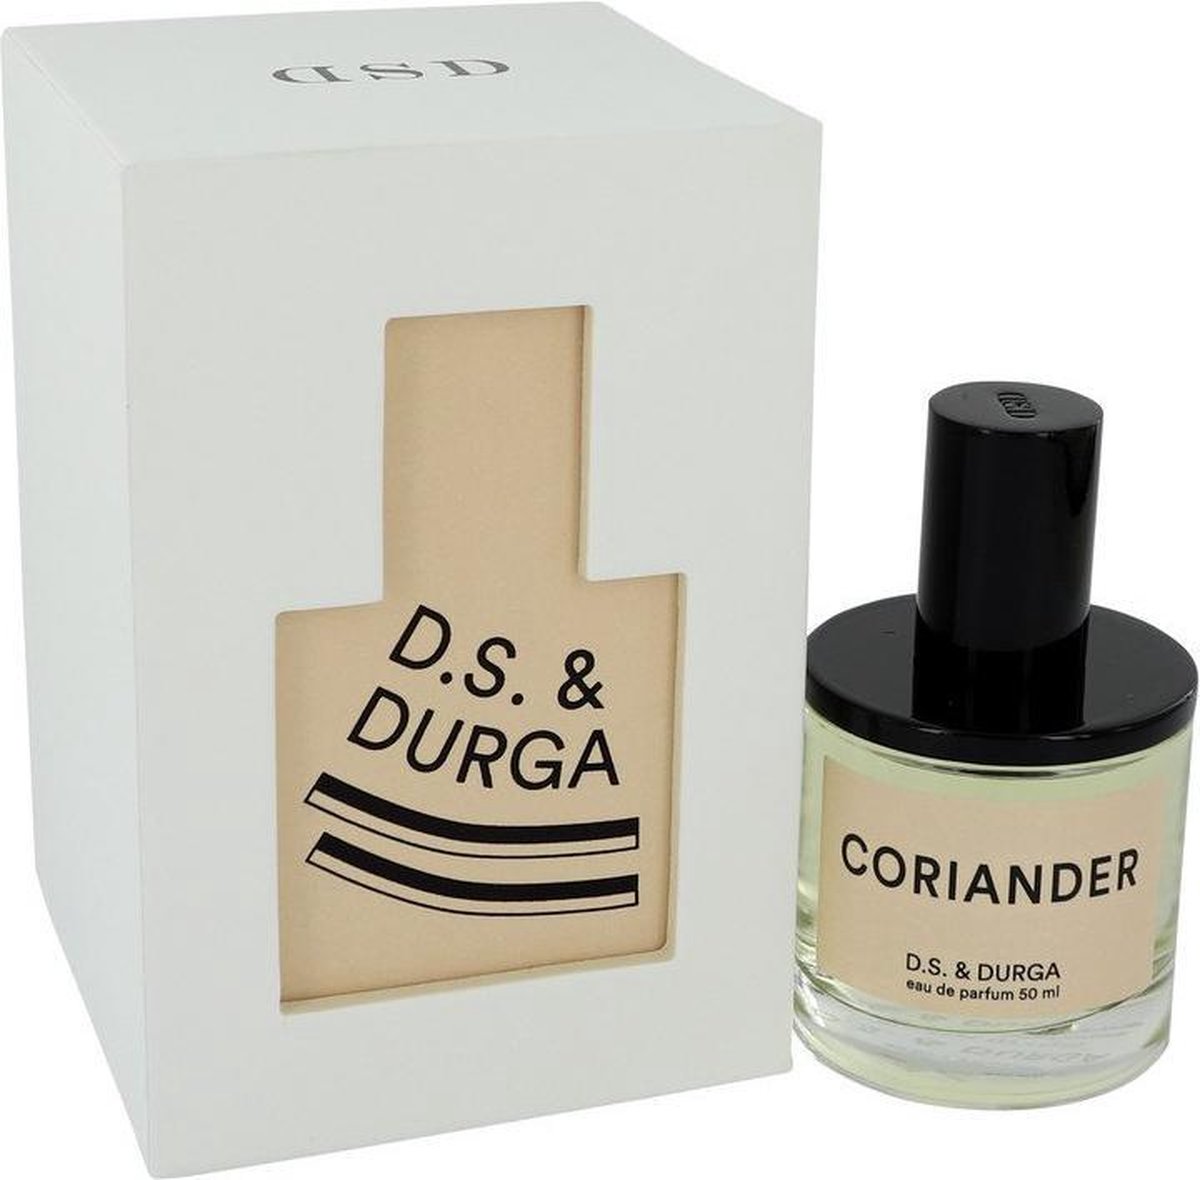 Coriander by D.S. & Durga 50 ml - Eau De Parfum Spray